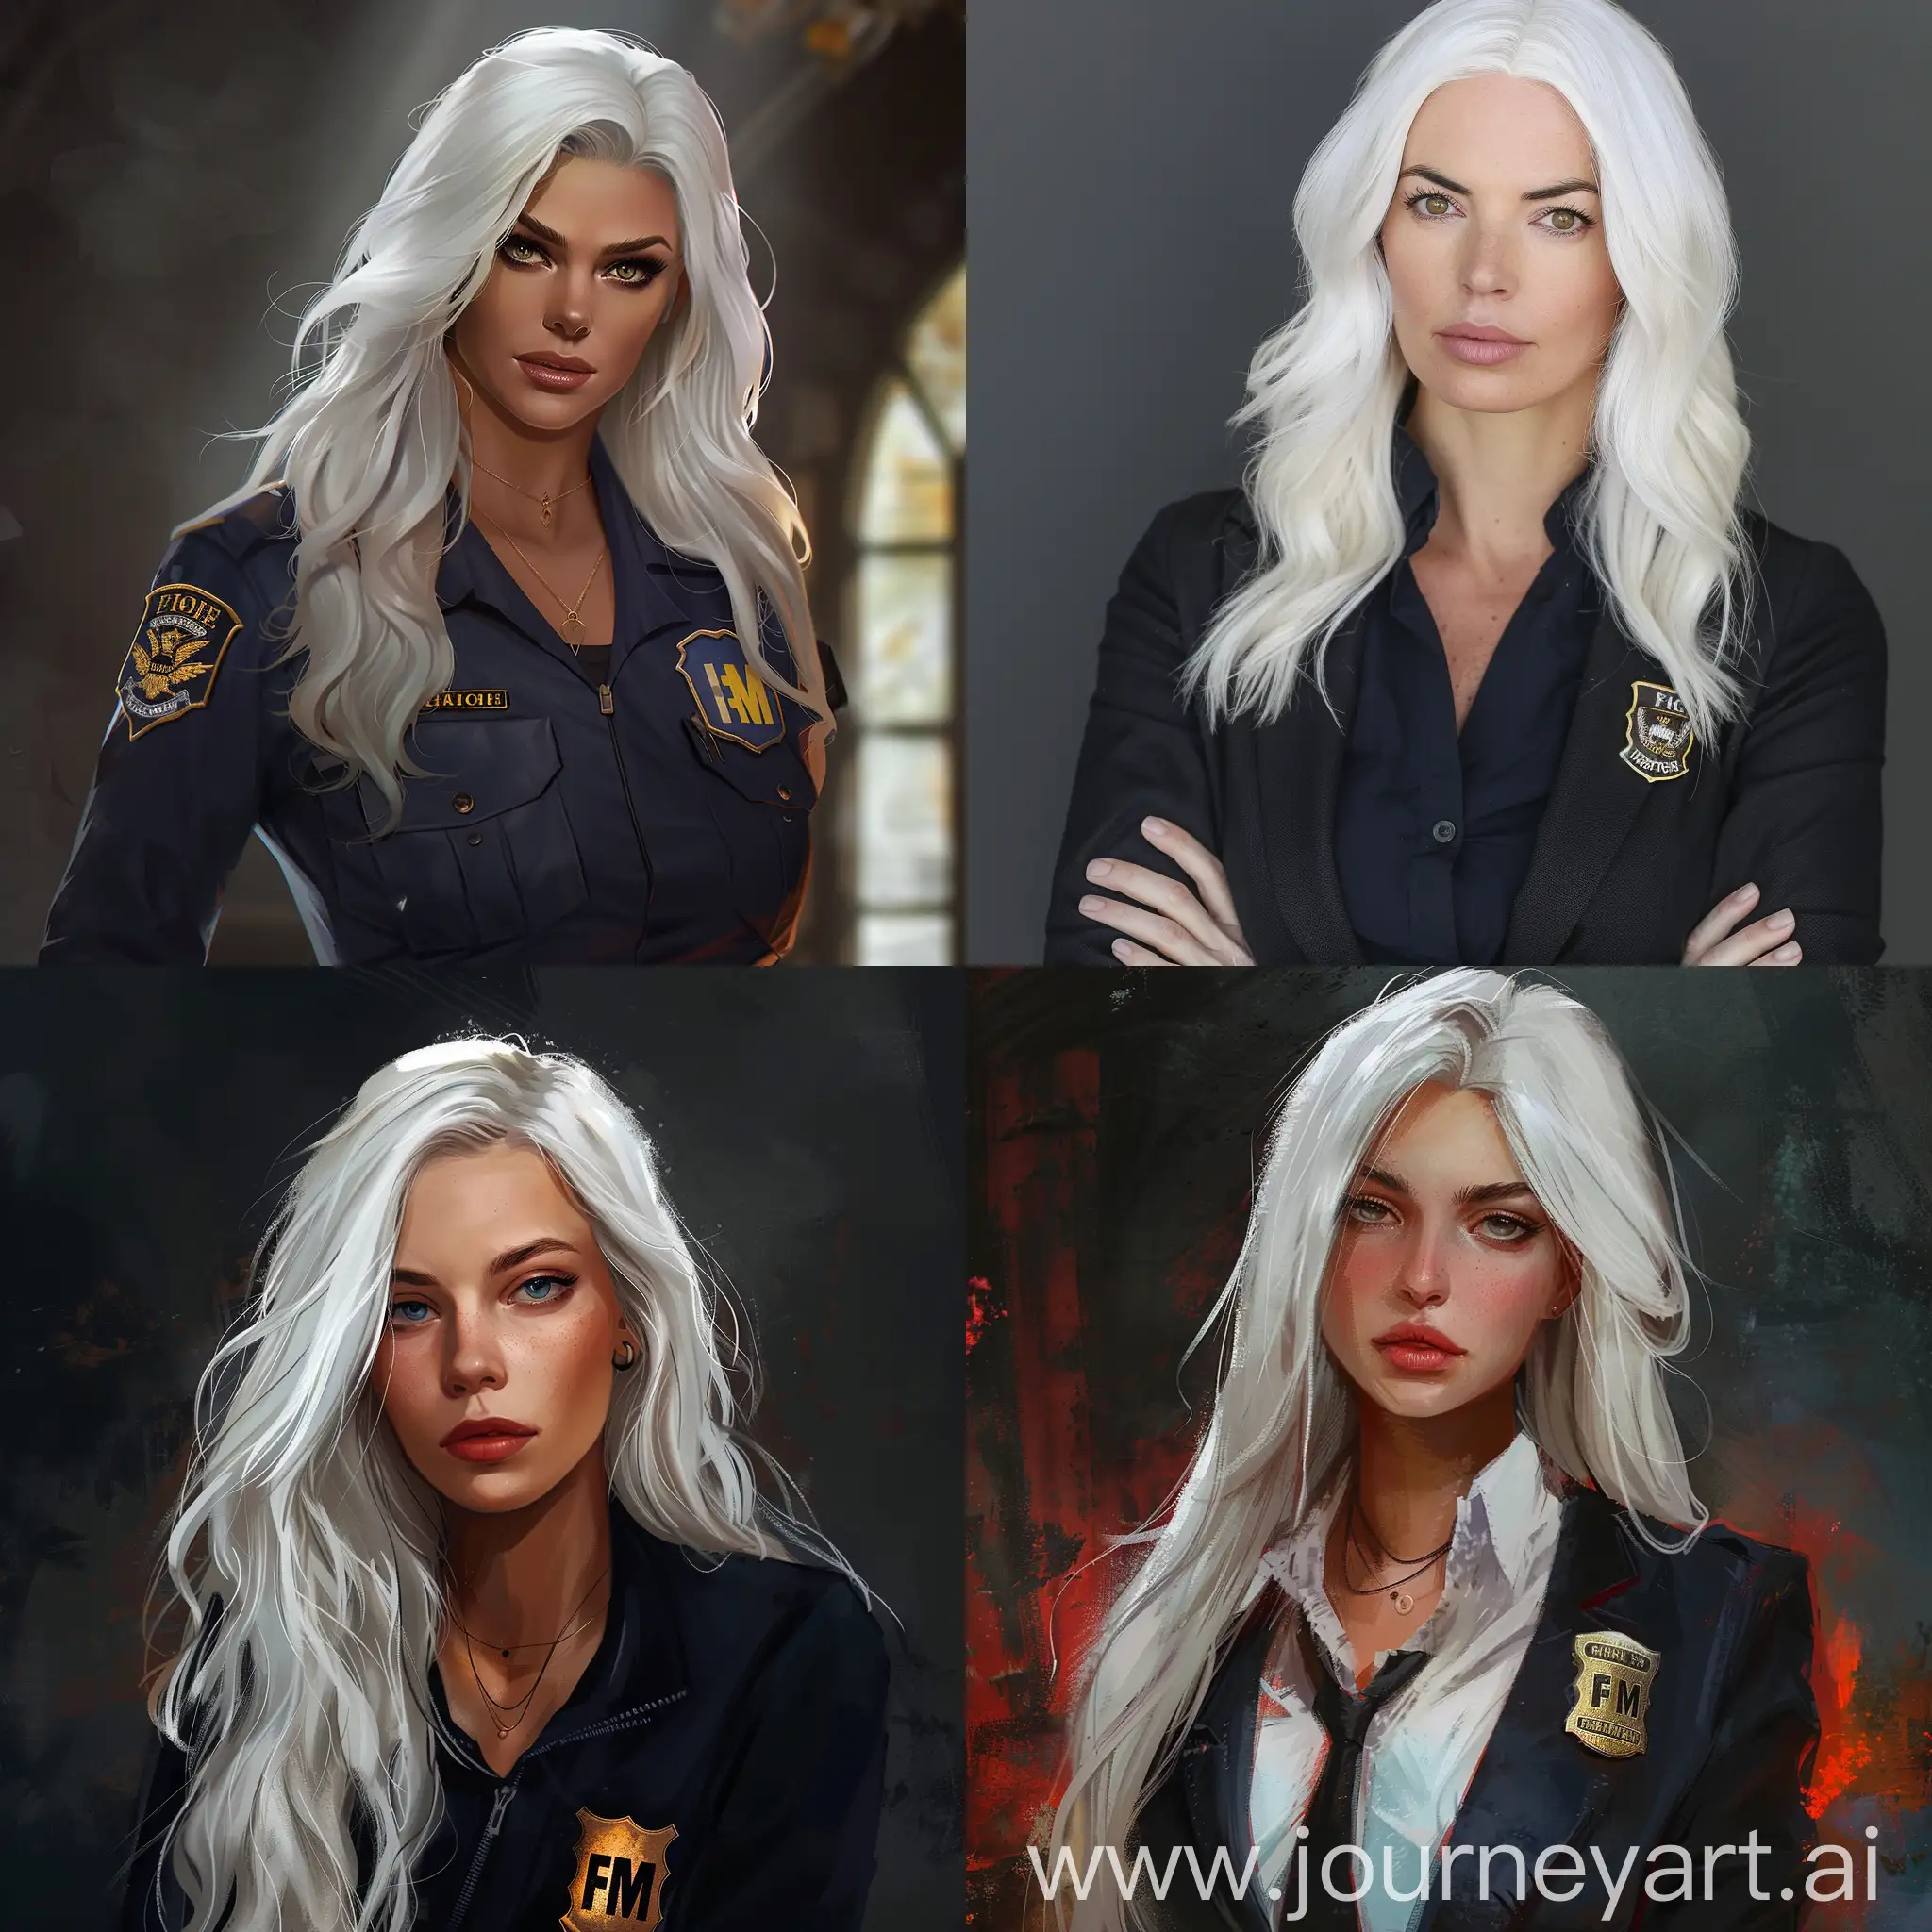 Mysterious-FBI-Girl-with-Striking-White-Hair